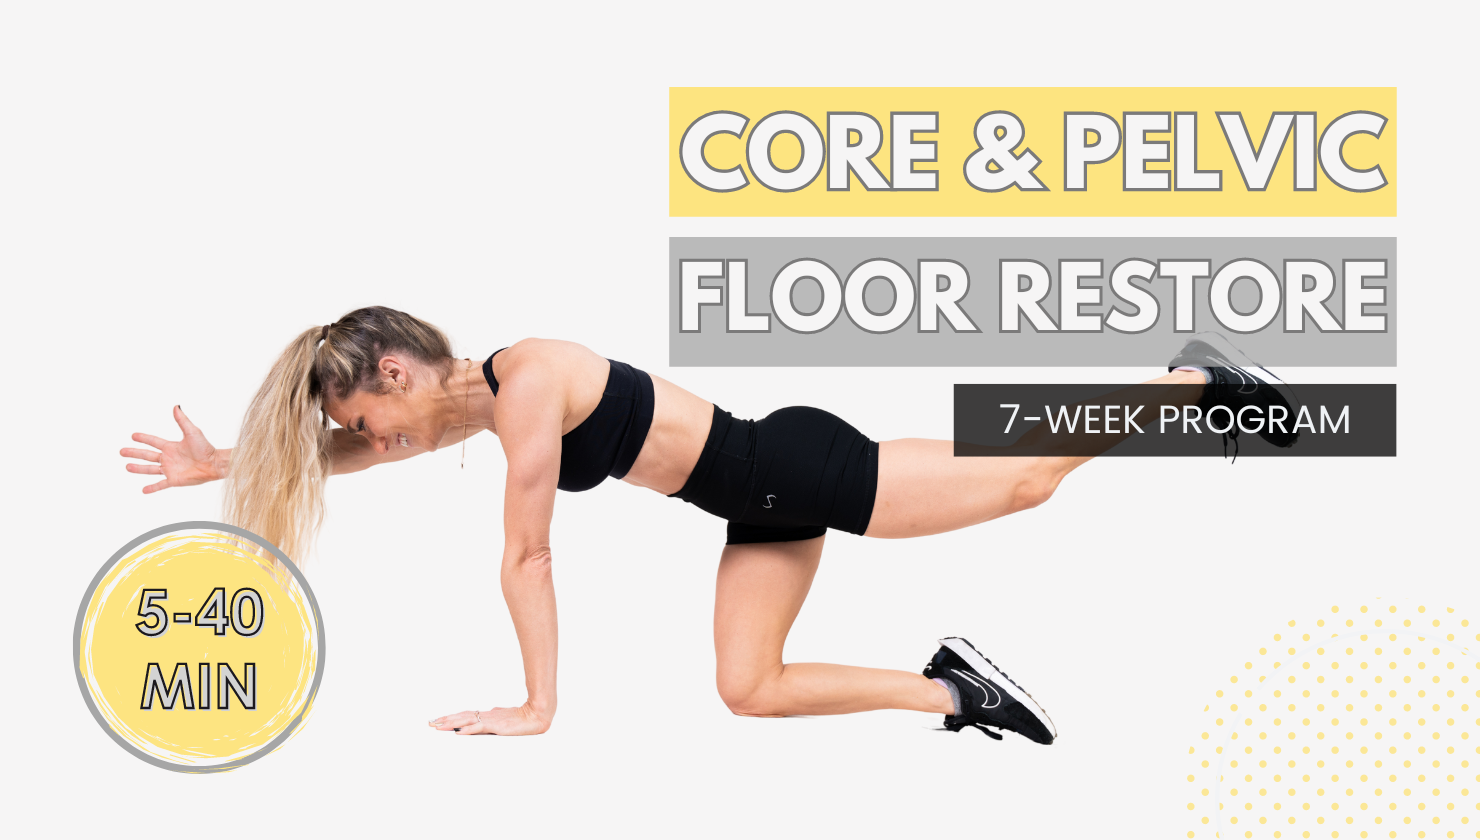 Core & Pelvic Floor Restore – Fittest Core